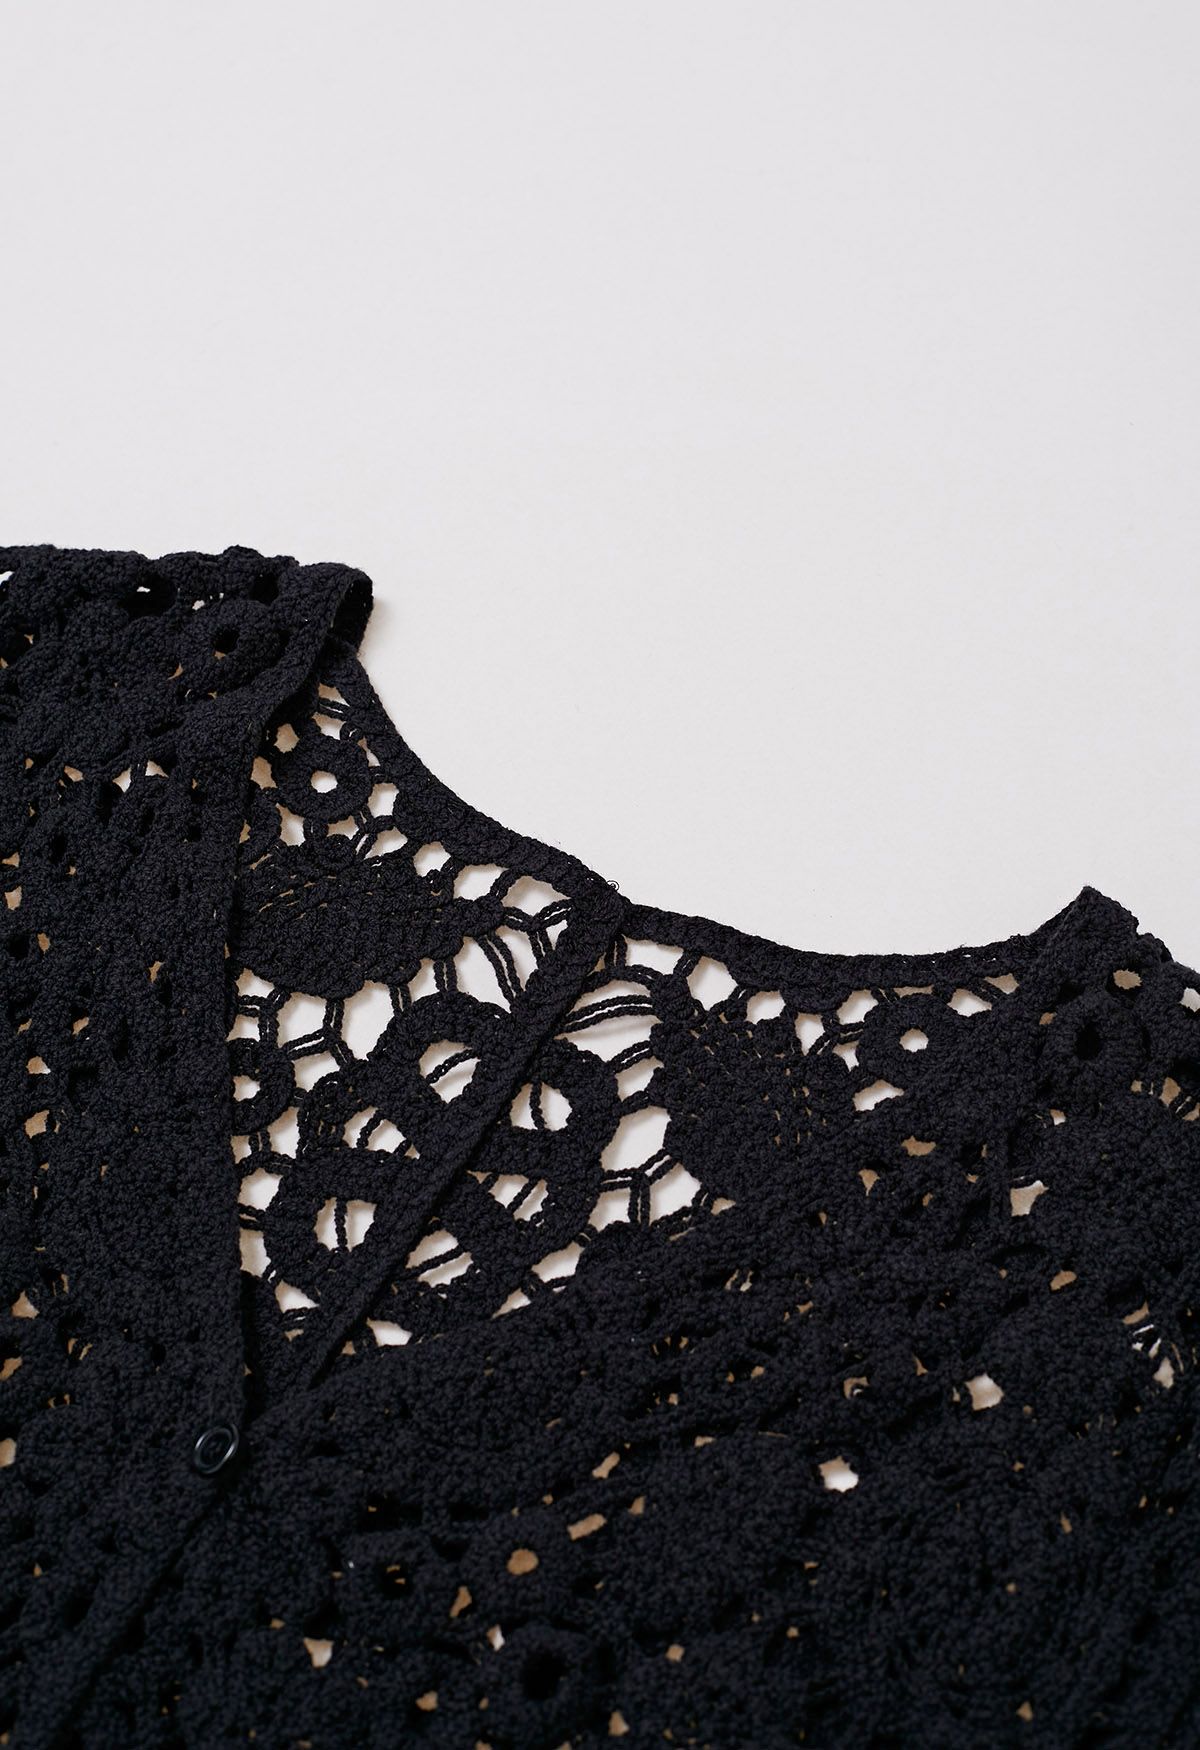 Bohemian Flair Crochet Cardigan in Black